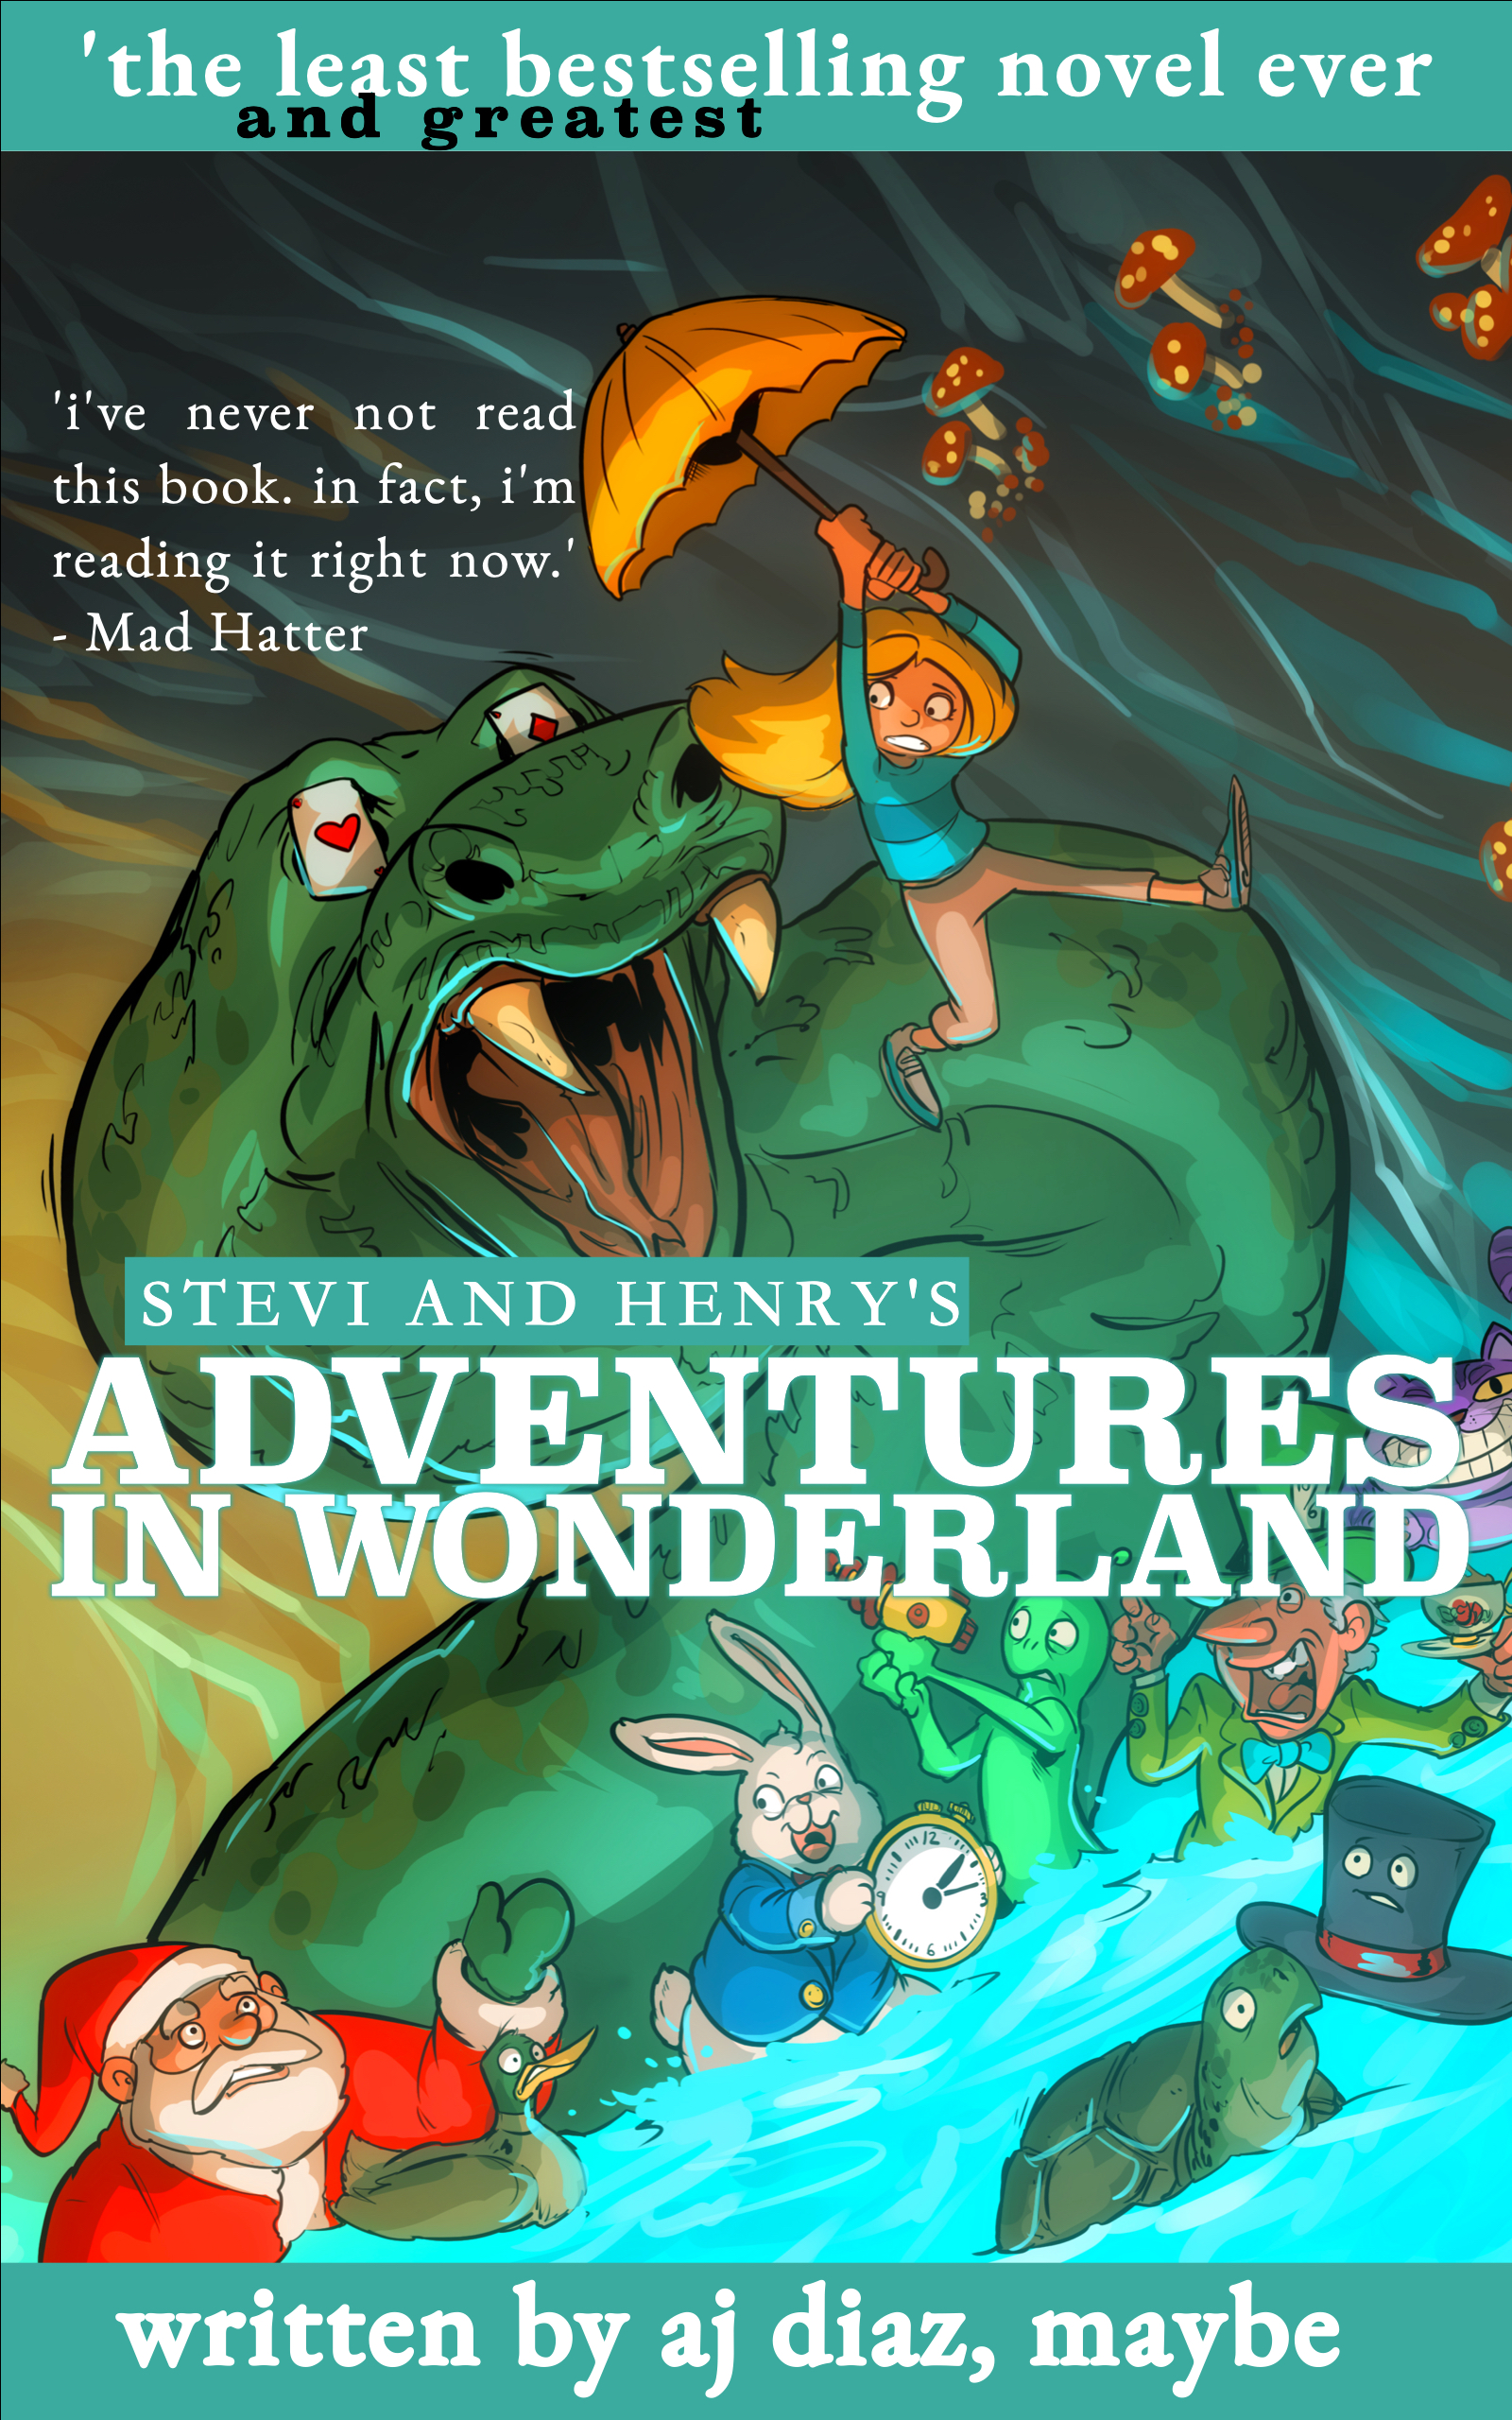 stevi and henry's adventures in wonderland